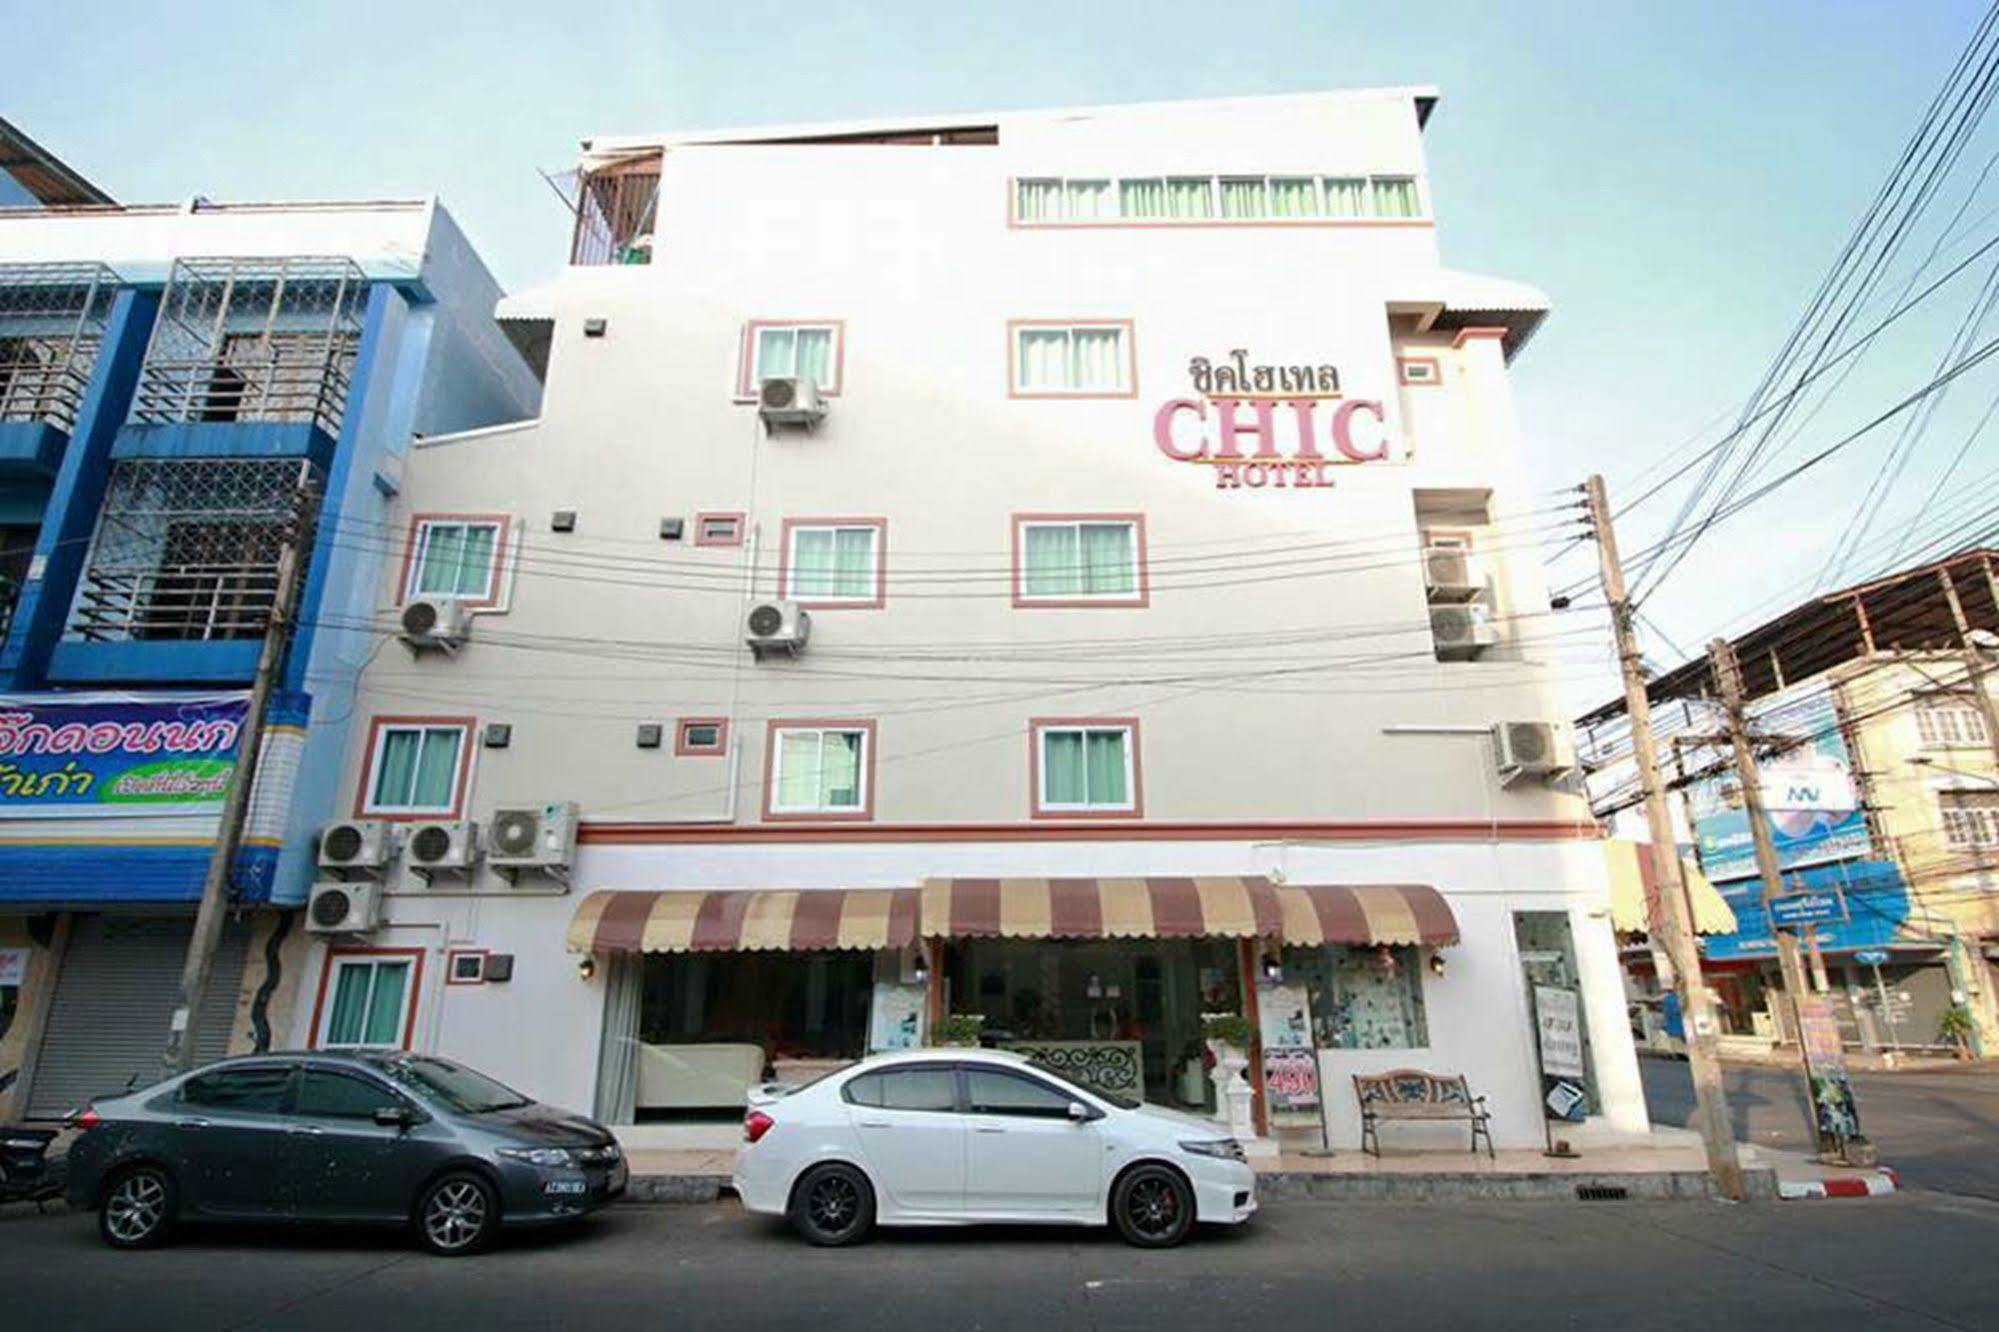 Chic Hotel Suratthani Сураттхани Экстерьер фото